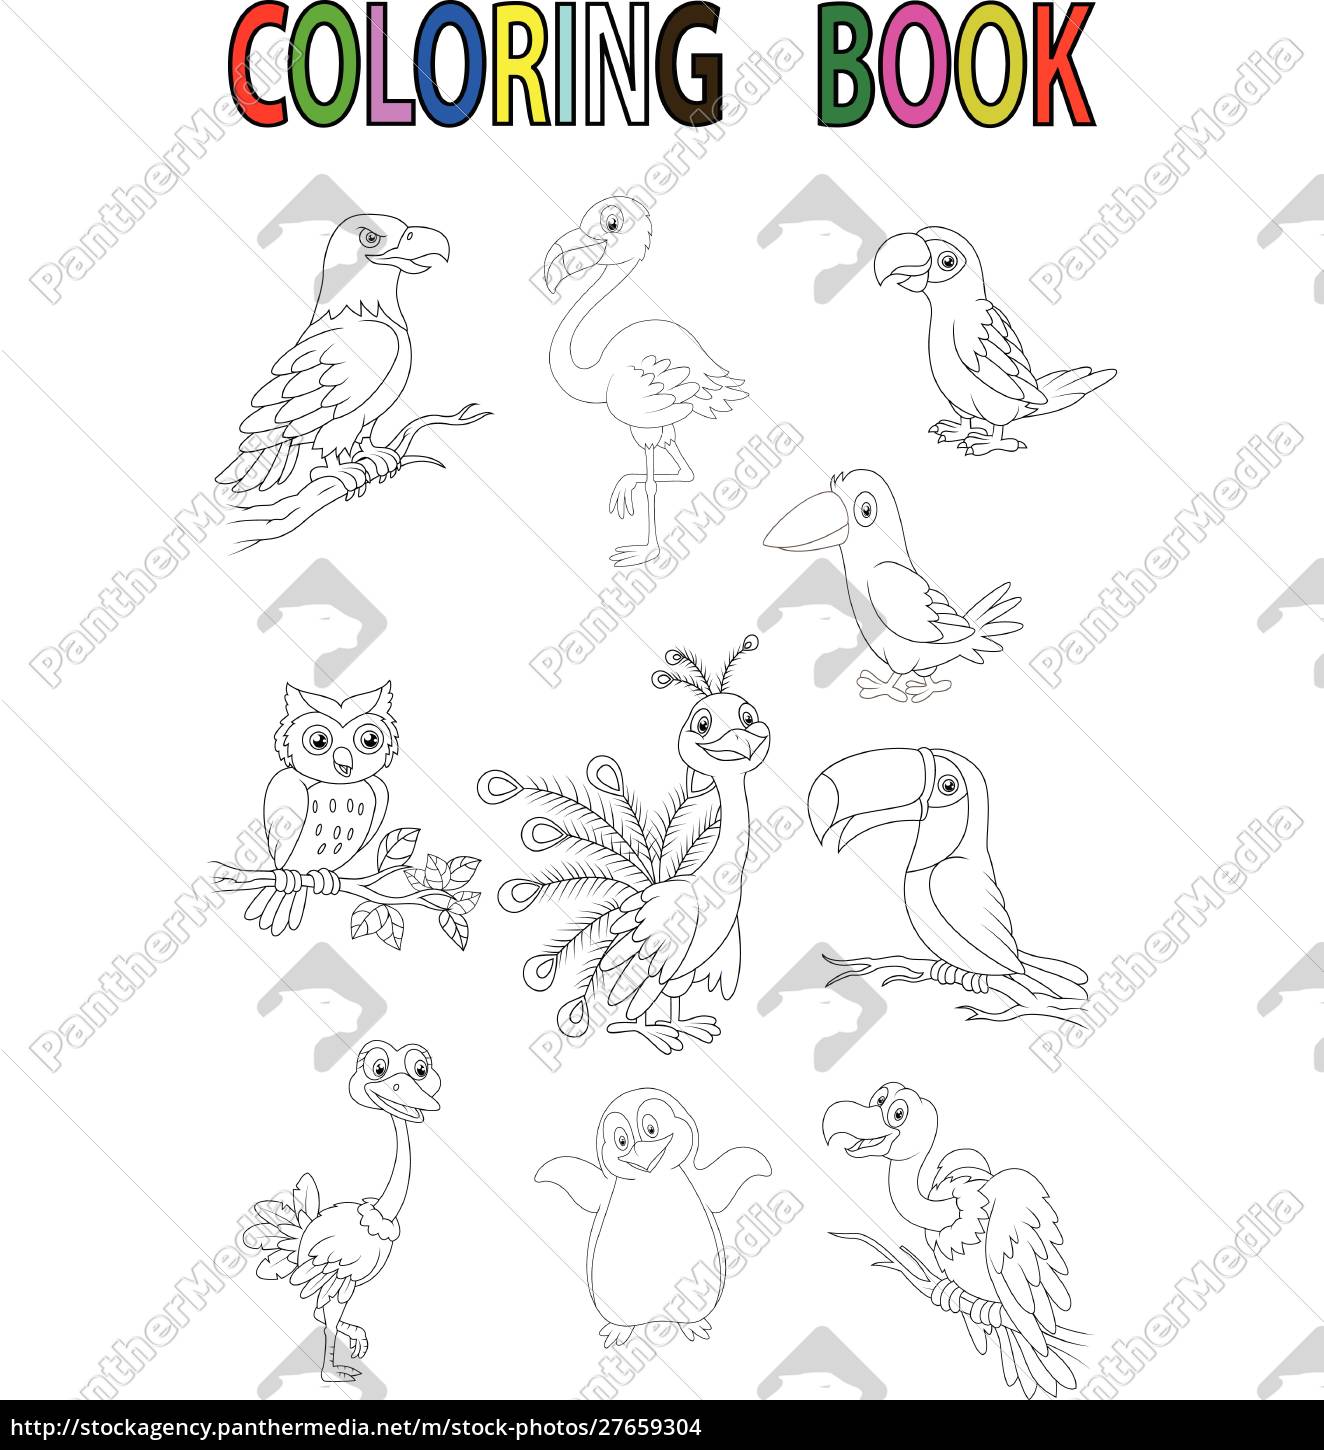 Download Cartoon Bird Coloring Book Royalty Free Photo 27659304 Panthermedia Stock Agency